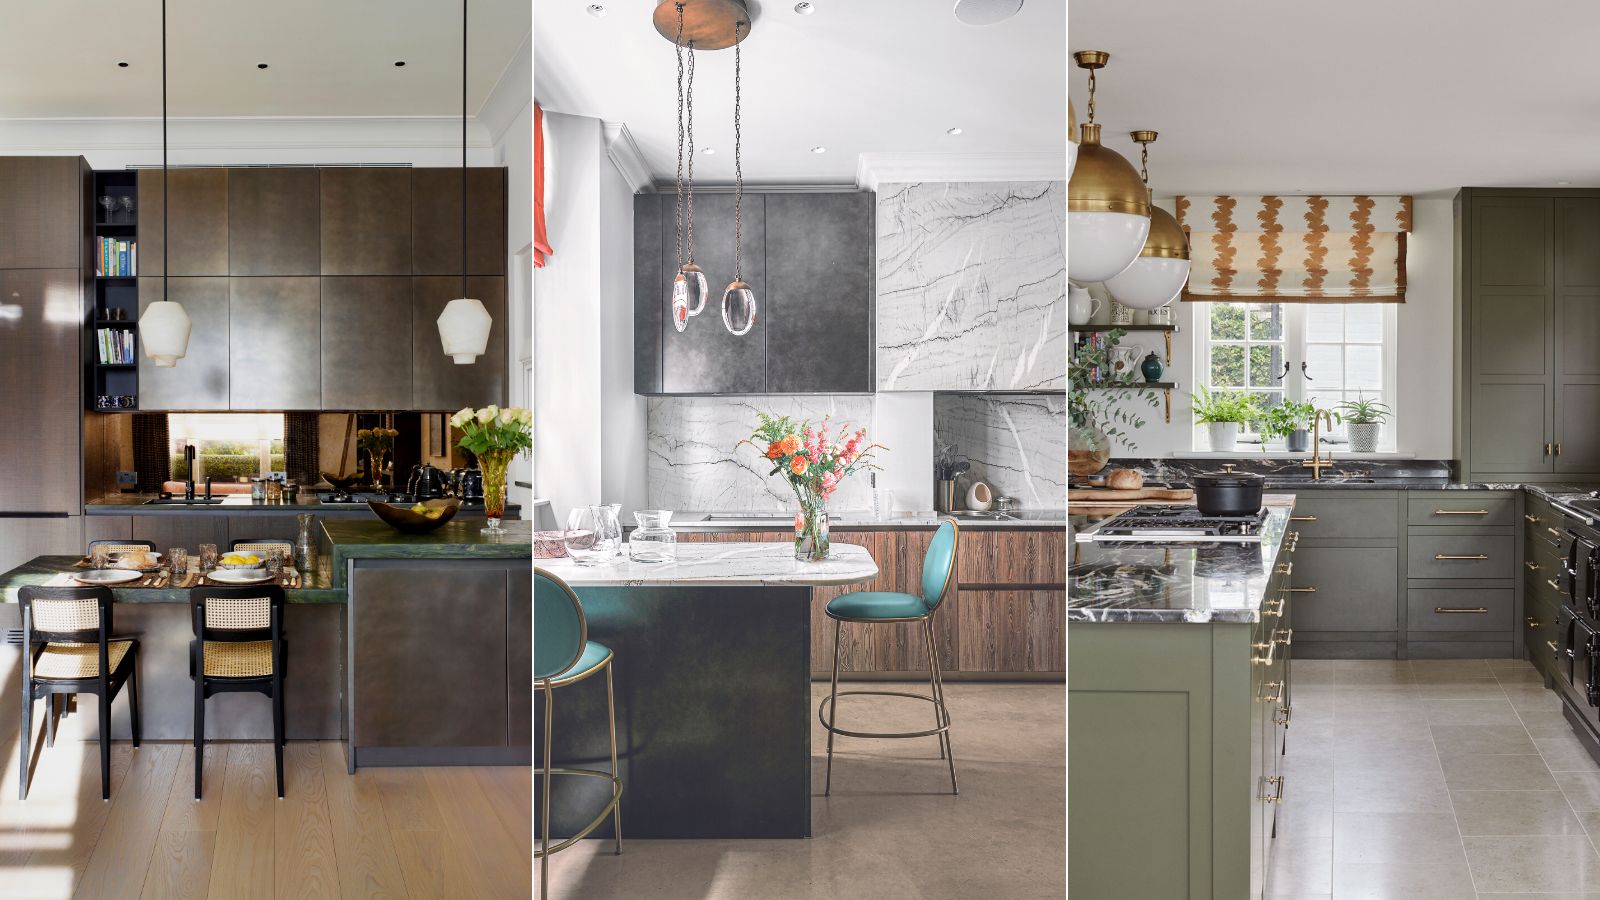 Kitchen Layout Templates: 6 Different Designs